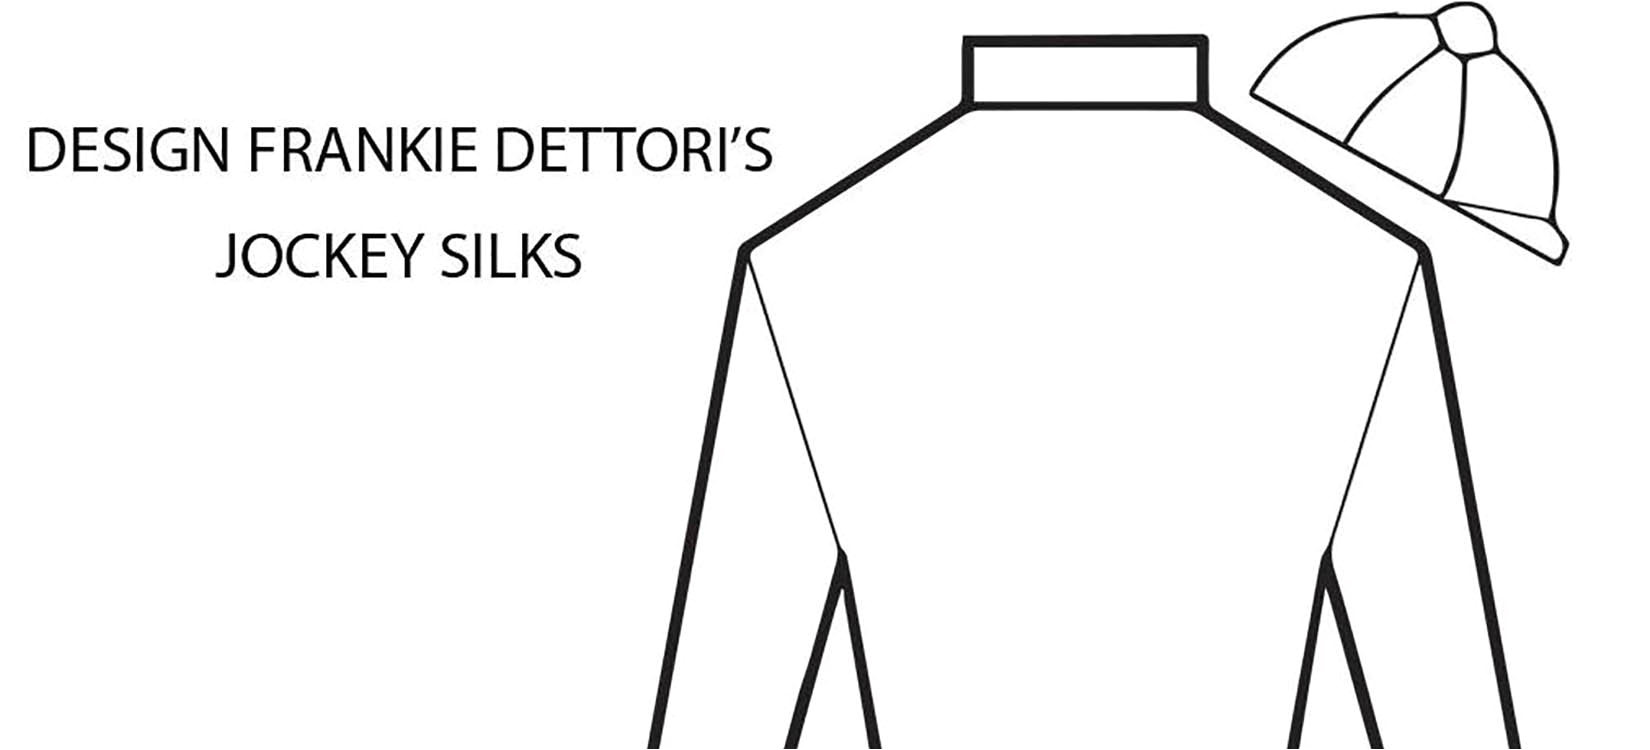 design frankie dettoris jockey silks